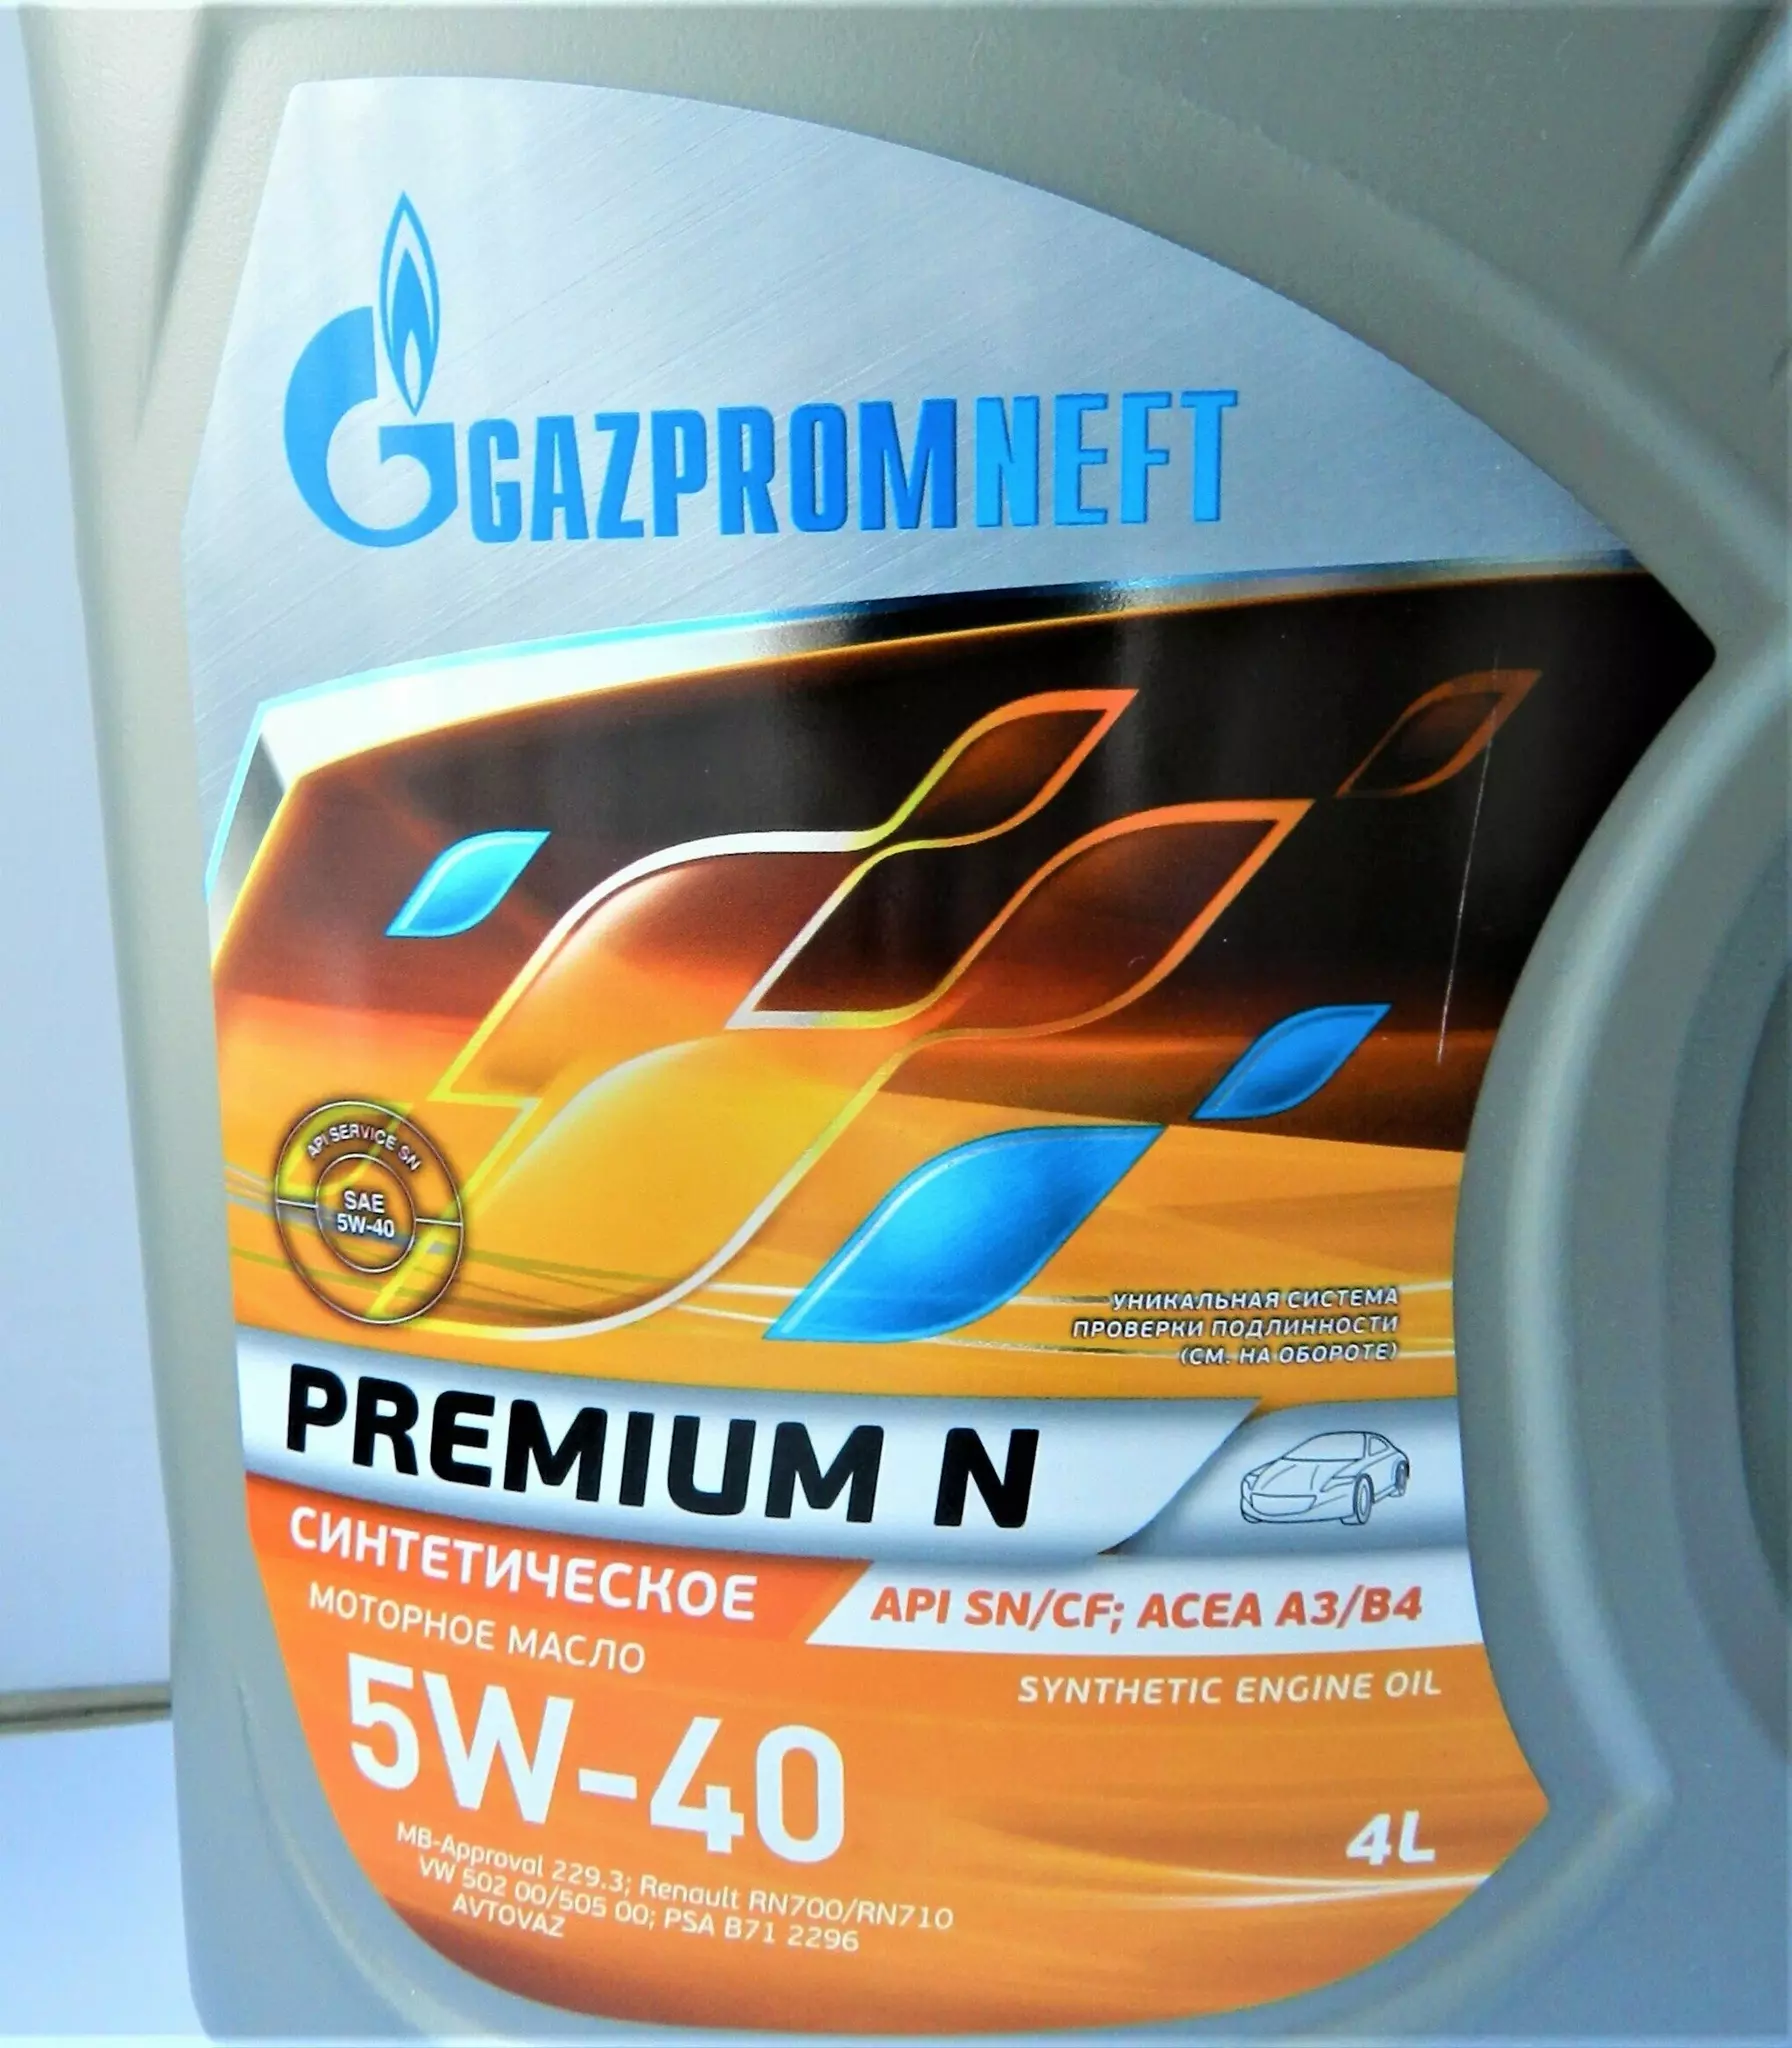 Gazpromneft Premium n 5w-40. Premium n5w40 4л. Масло Premium n 5w-40 4л Gazpromneft. Gazpromneft масло Premium n 5w-40 4л ЕОМ номер. Моторное масло gazpromneft premium n